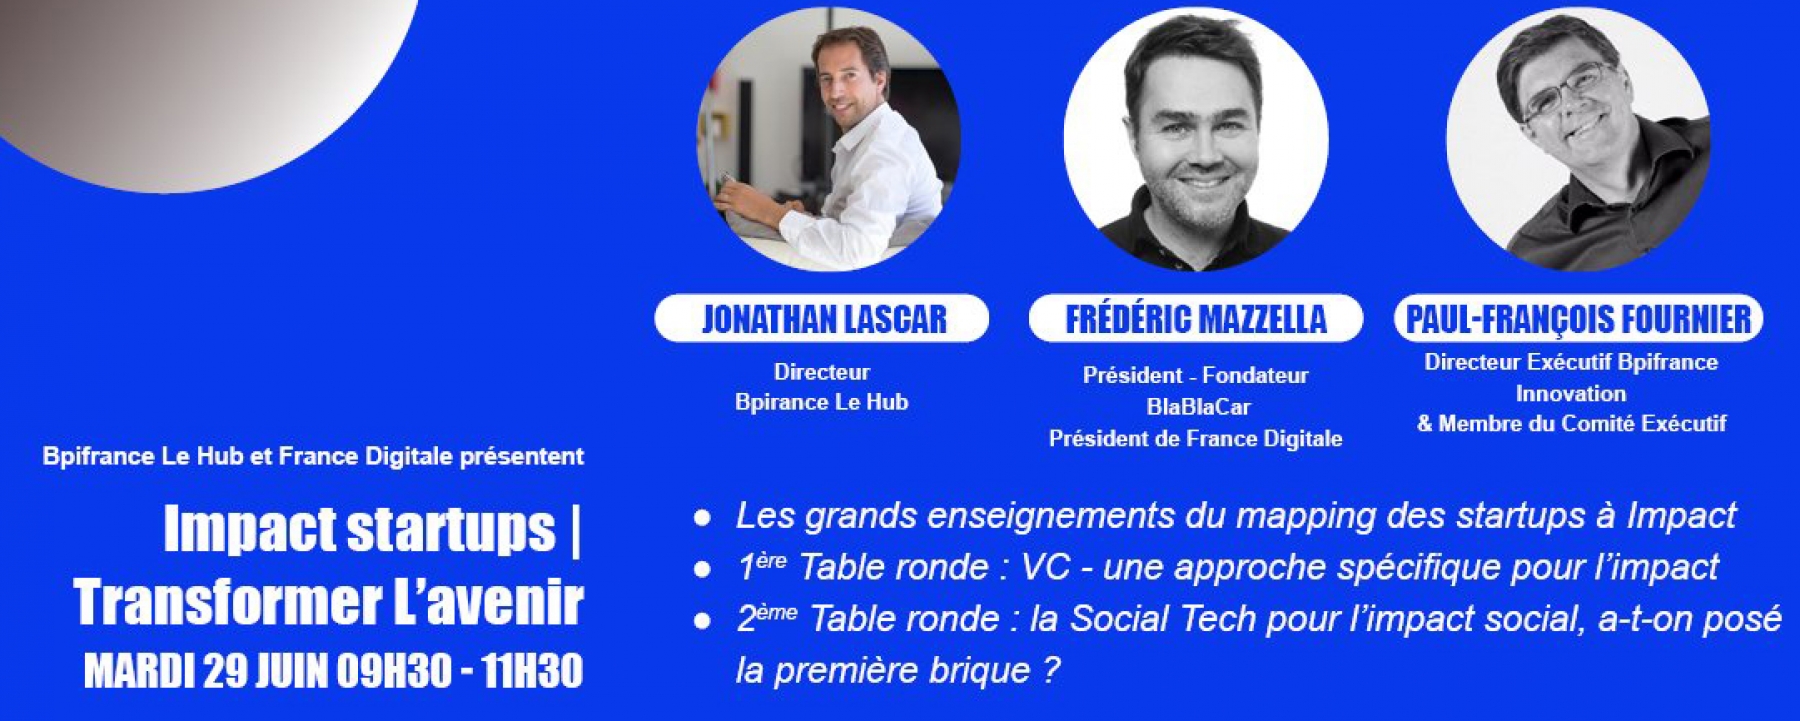 Impact Startups - Transformer l'avenir le 29 juin par Bpi France et France Digitale